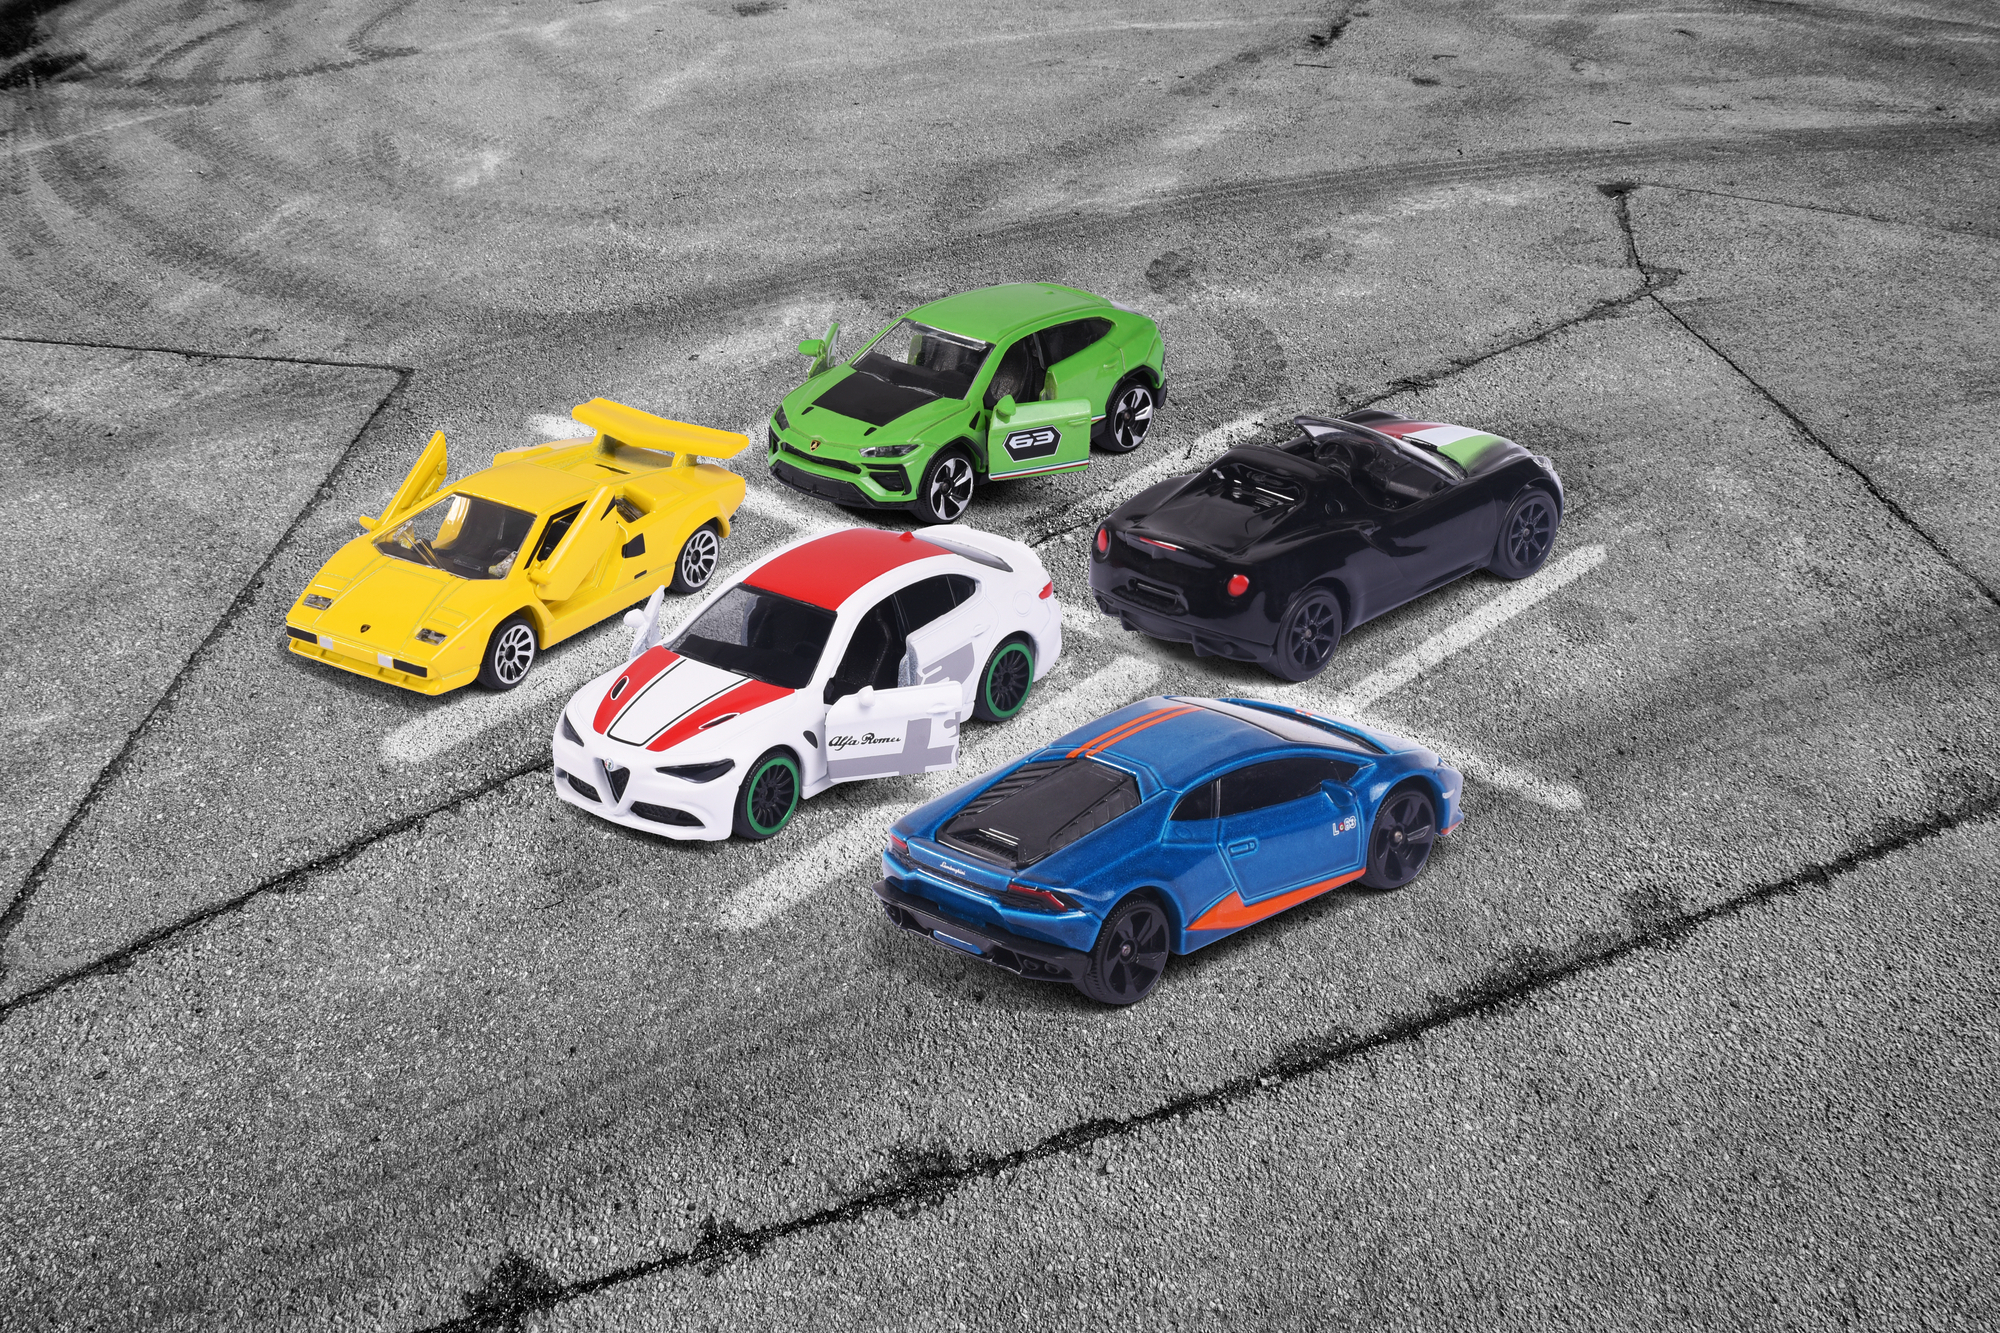 MAJORETTE Dream Cars Italy Teile Mehrfarbig Geschenkset Spielzeugauto 5